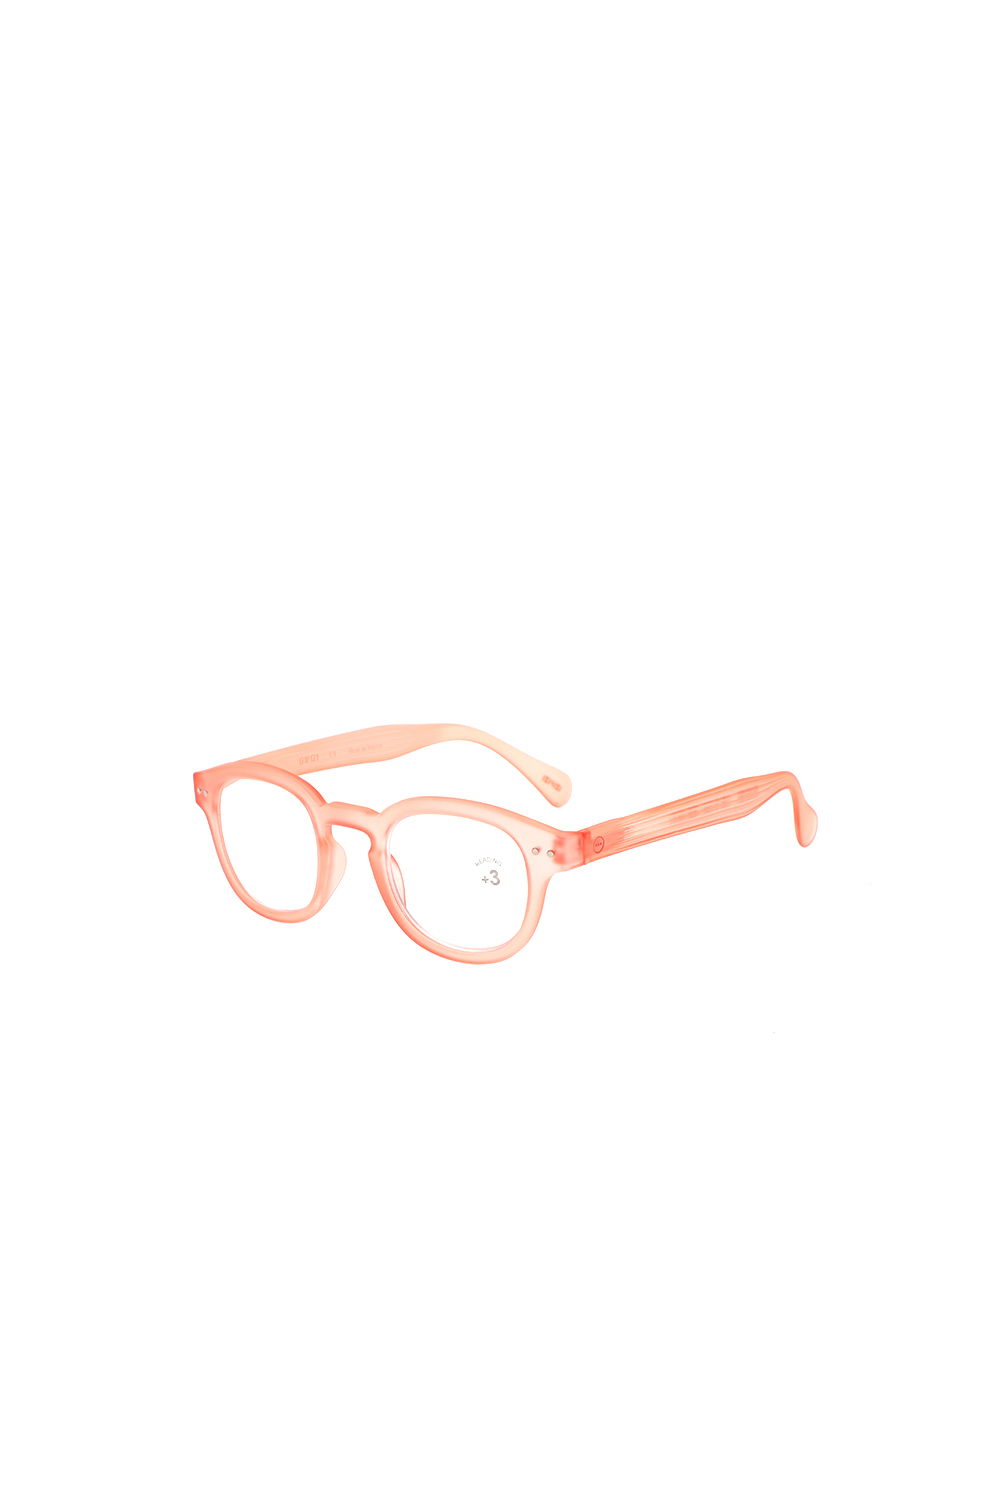 IZIPIZI - Unisex γυαλιά οράσεως IZIPIZI READING BLOOM διαφανή ροζ Γυναικεία/Αξεσουάρ/Γυαλιά/Οράσεως